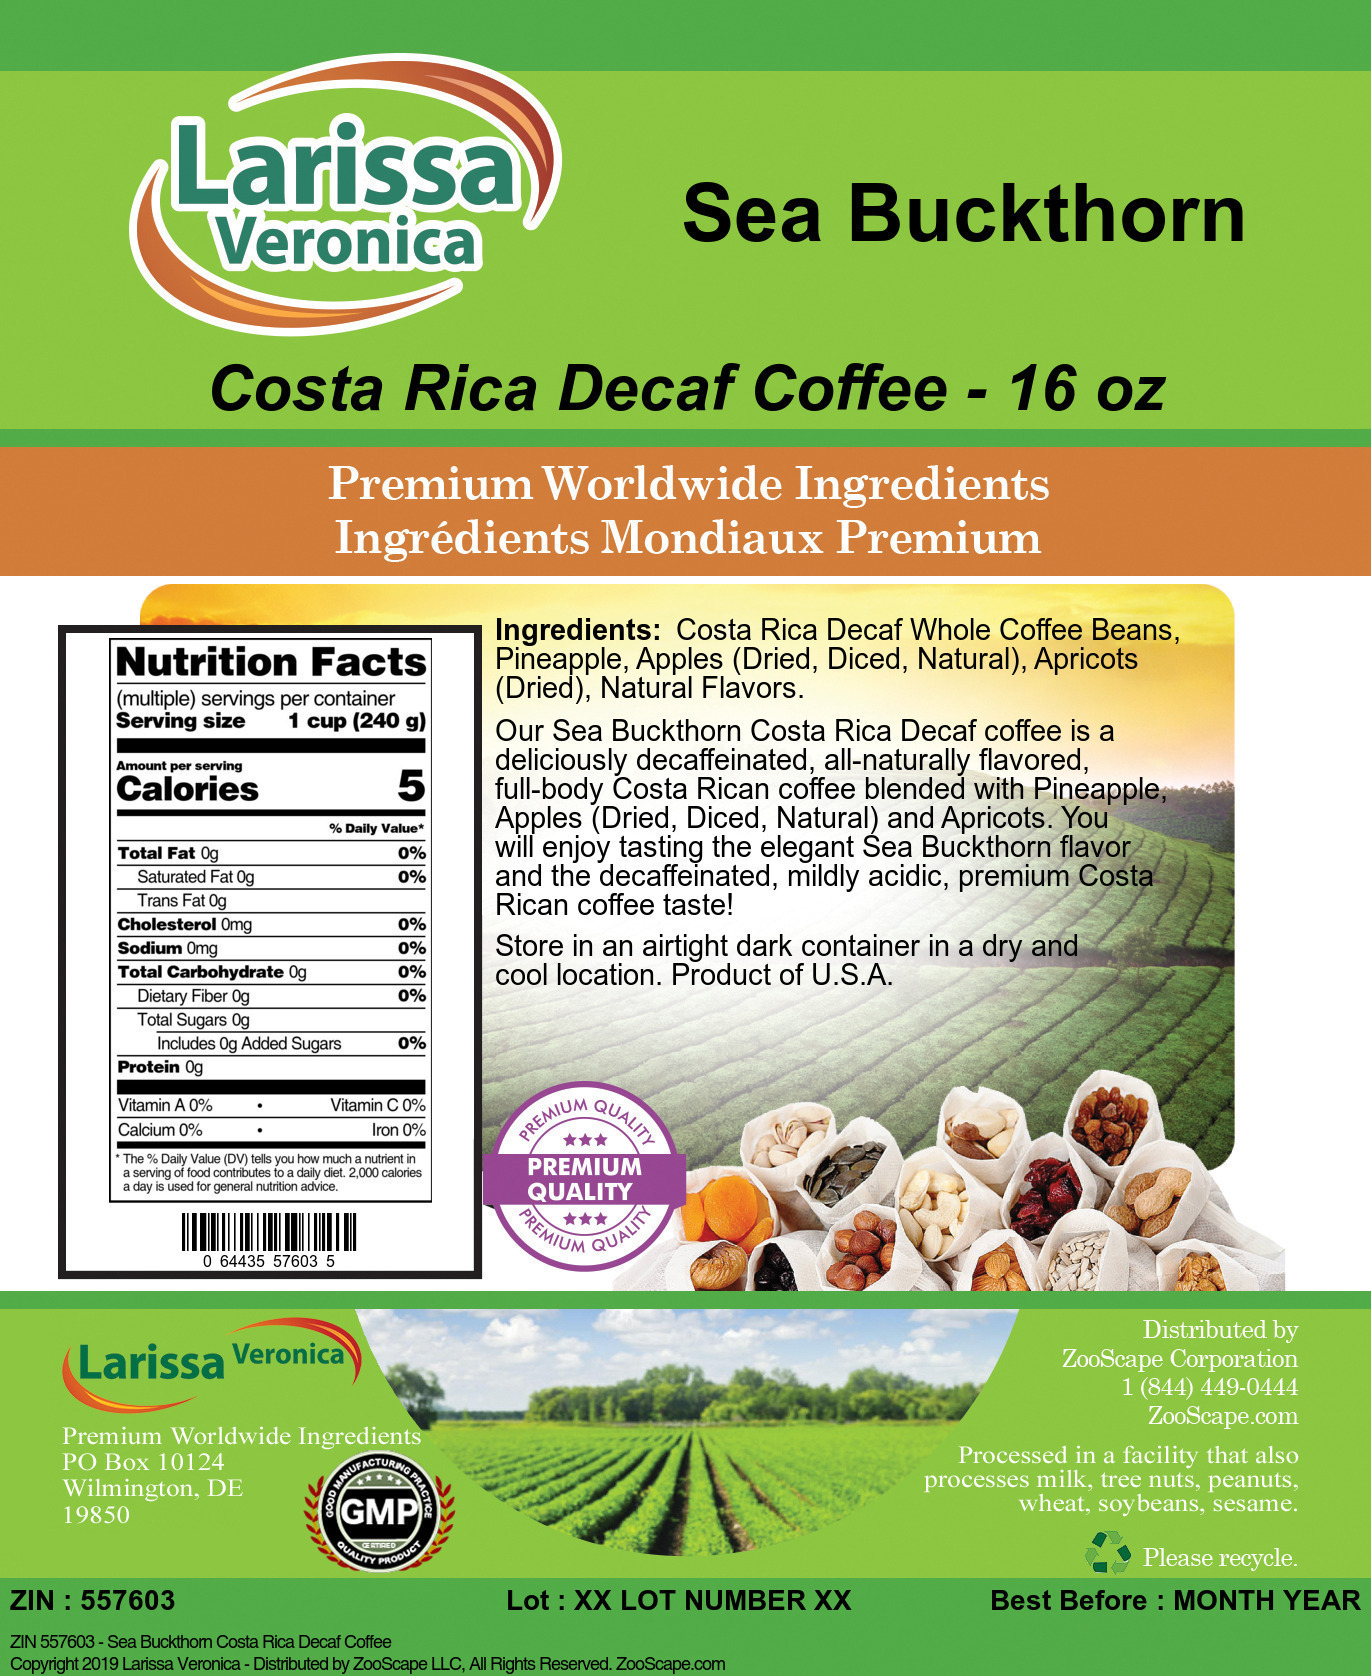 Sea Buckthorn Costa Rica Decaf Coffee - Label